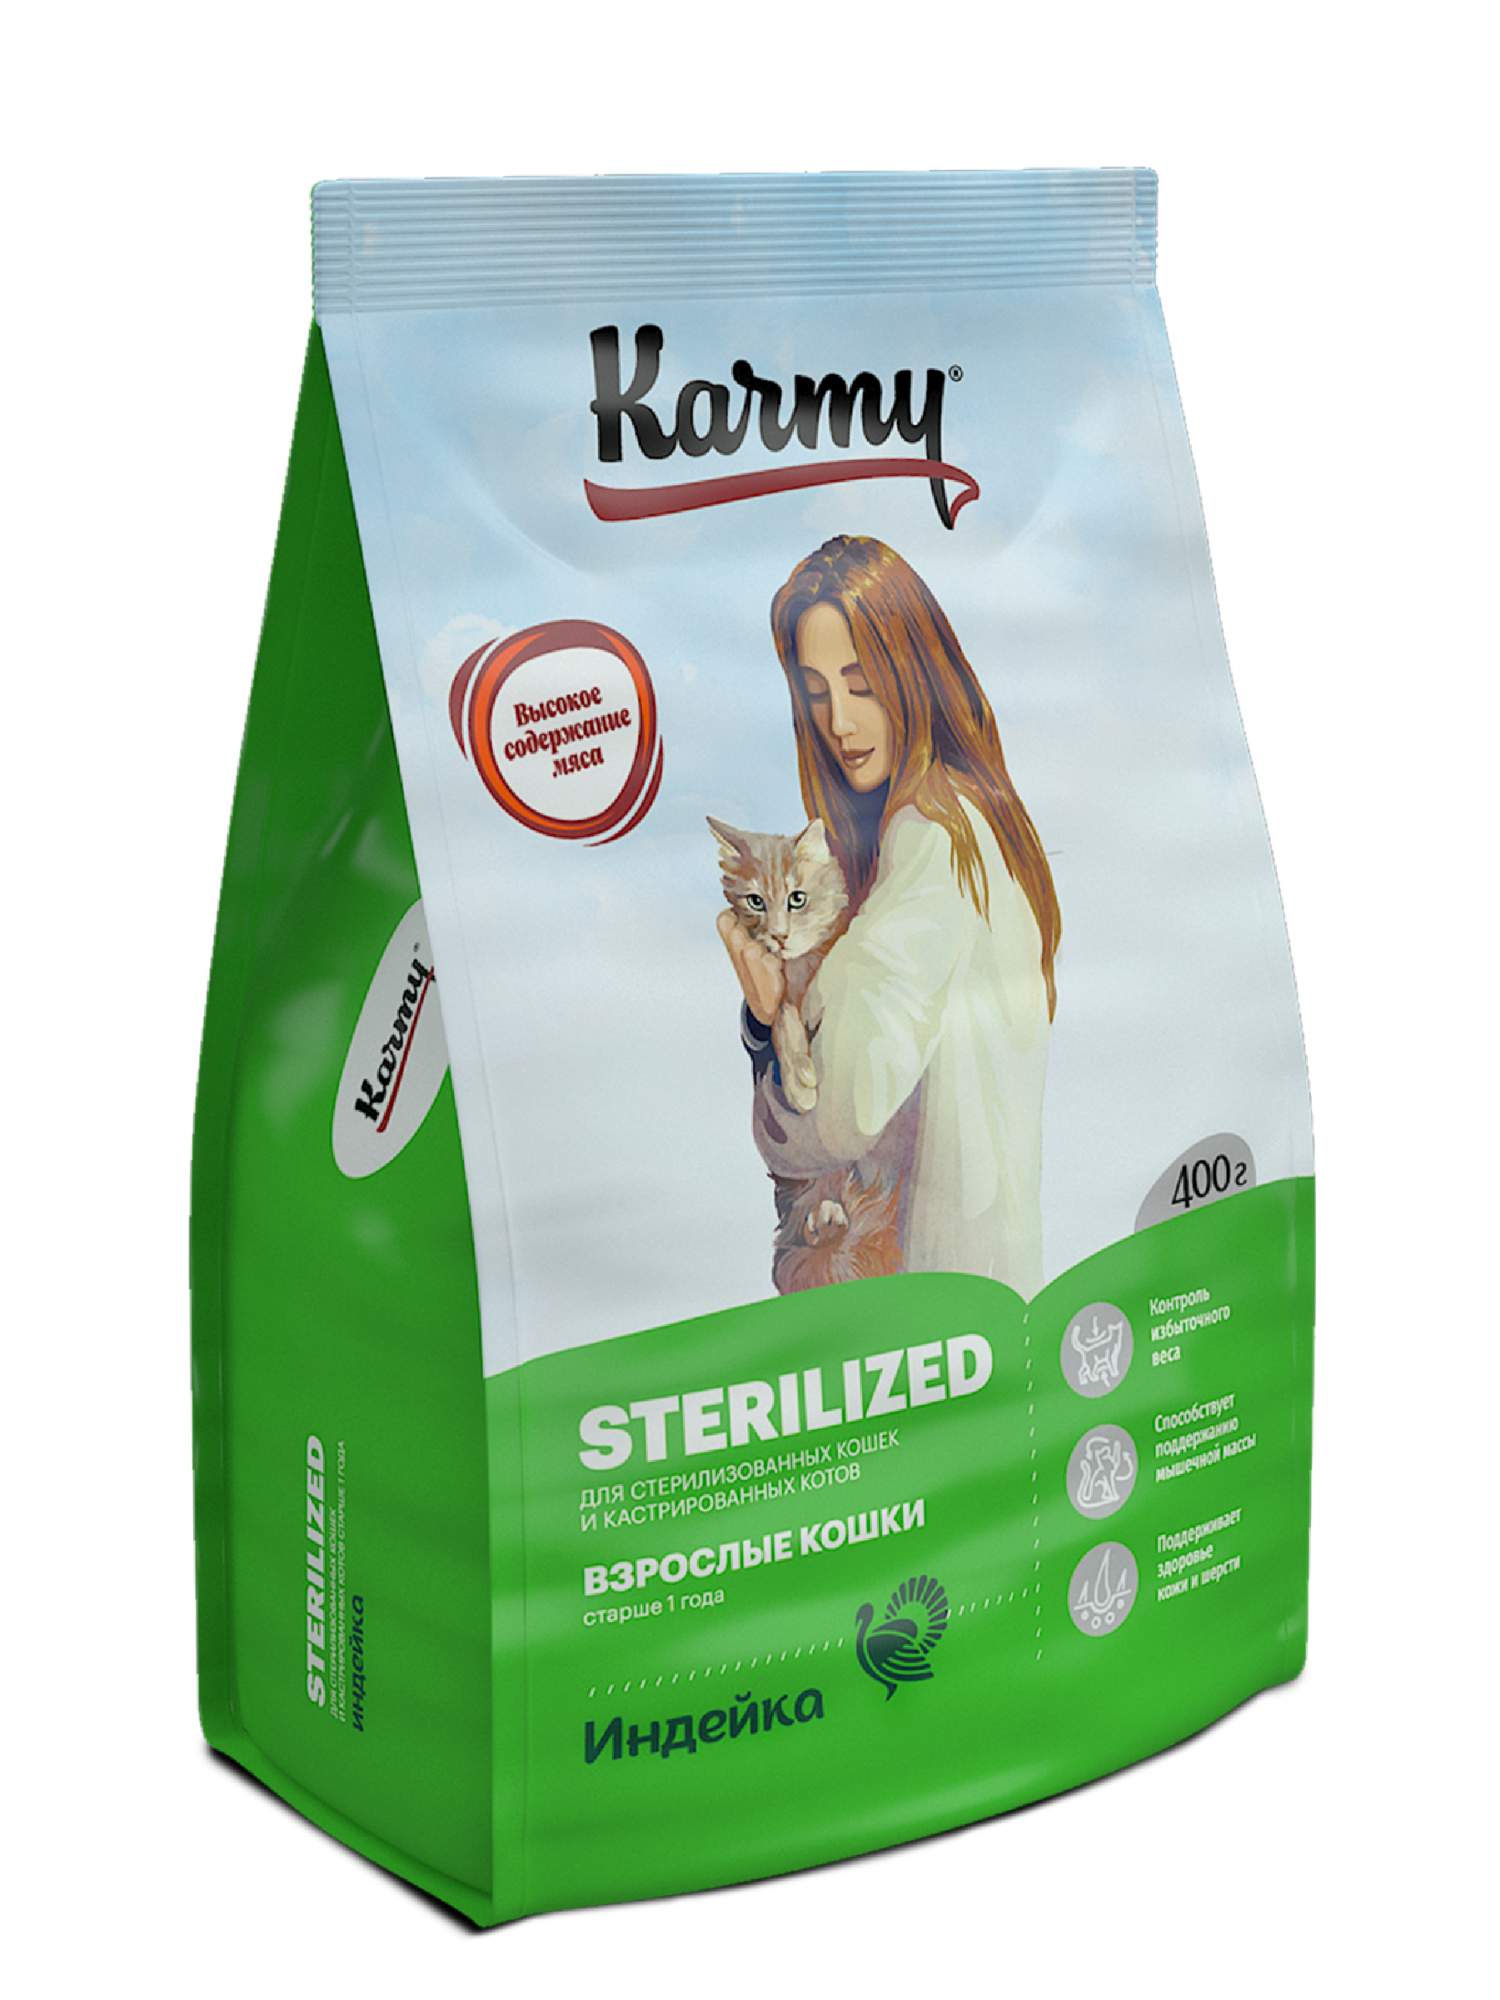 Купить сухой корм для кошек Karmy Sterilized, для стерилизованных, индейка, 0,4кг, цены на Мегамаркет | Артикул: 600000137619